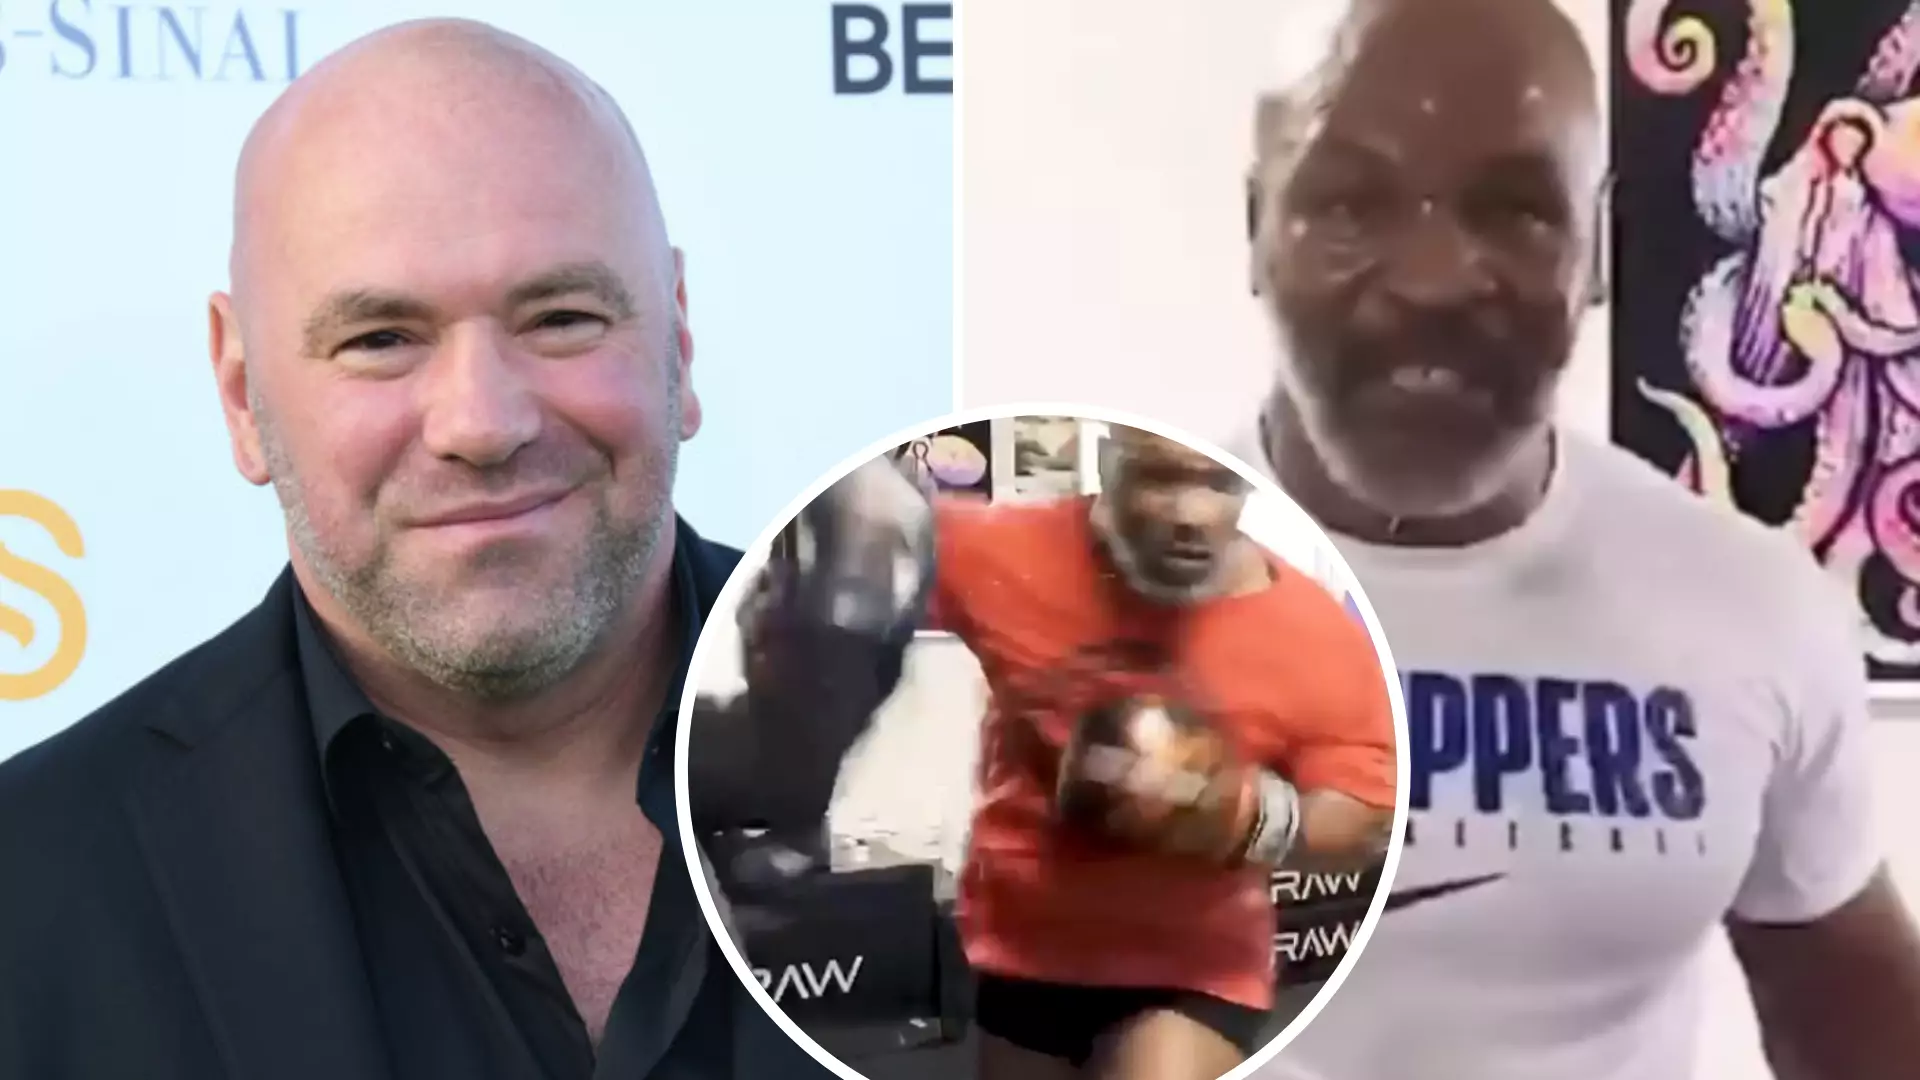 Dana White Sends Out Desperate Plea For Mike Tyson To Make U-Turn On Boxing Comeback